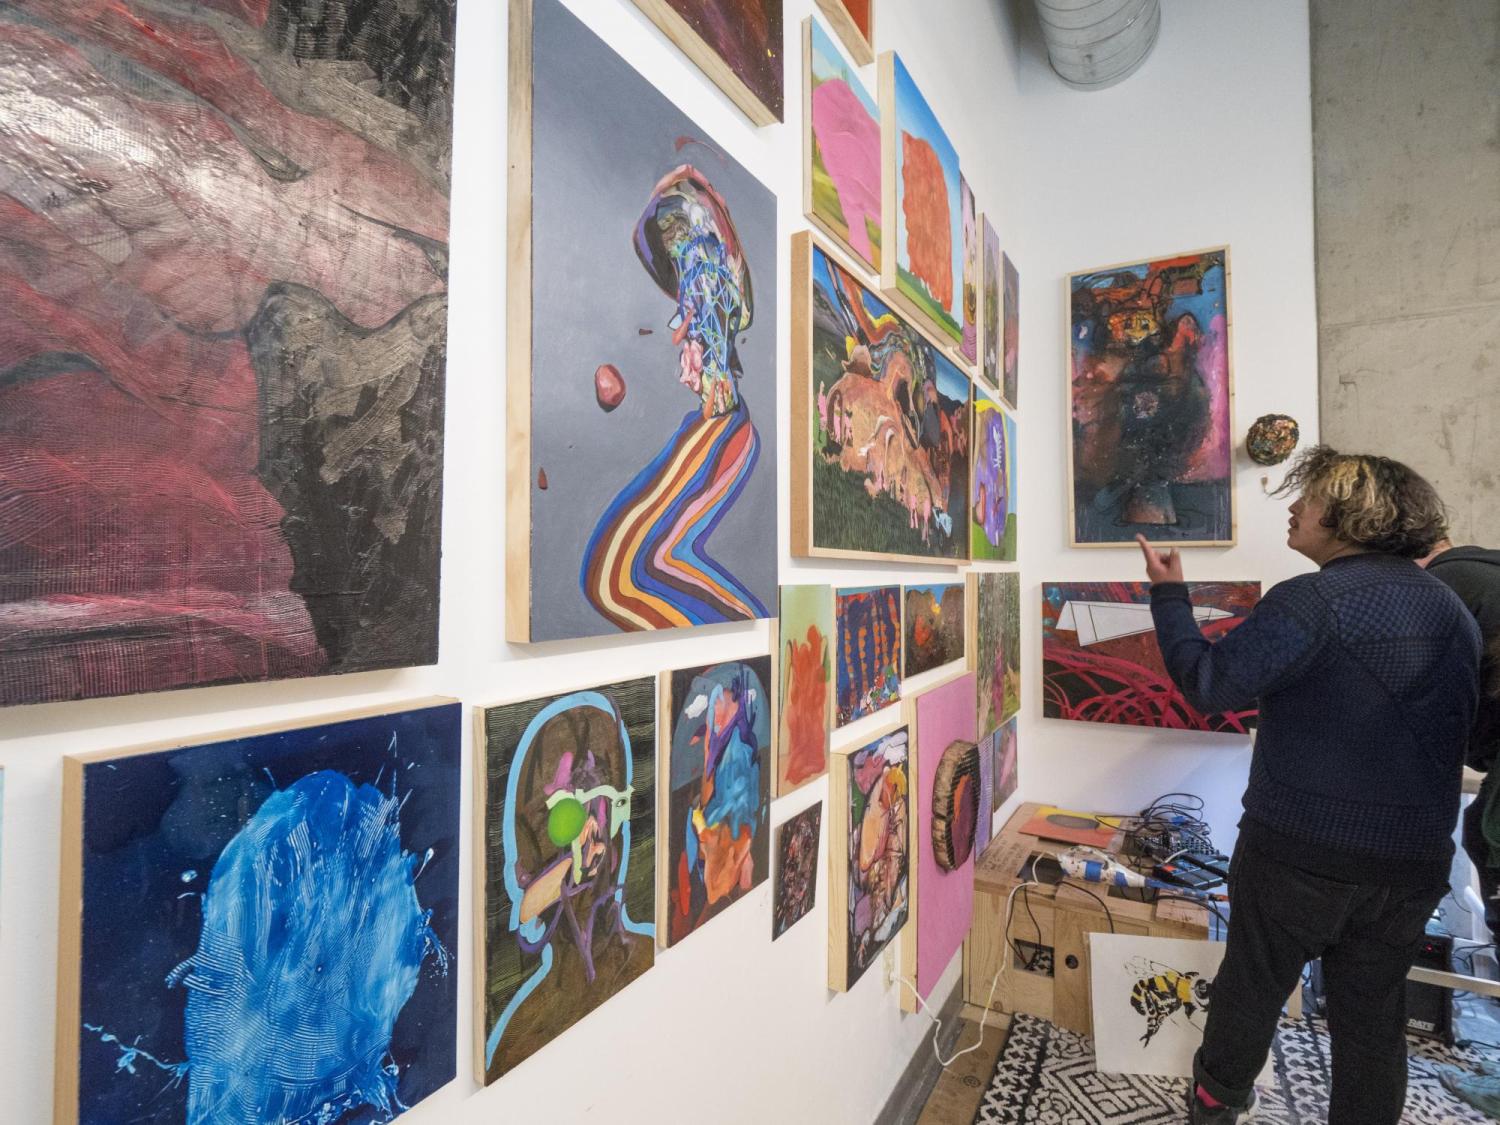 Students showcase their art at open studios. Photo by Glenn Asakawa.